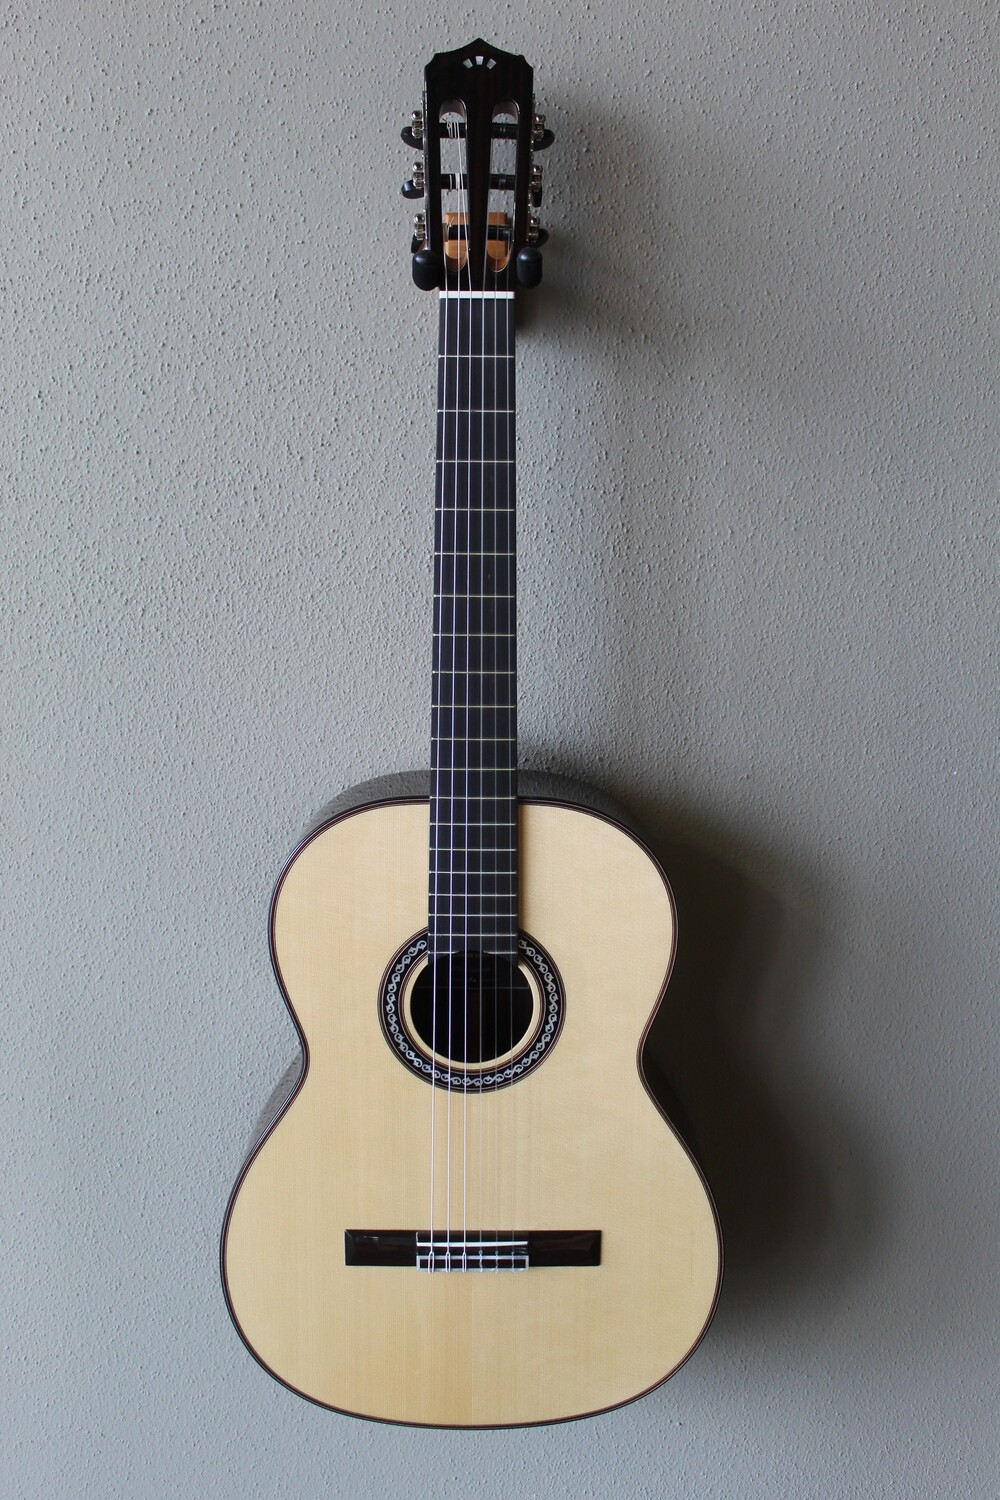 Cordoba C10 Crossover Spruce Top Nylon String Classical Guitar